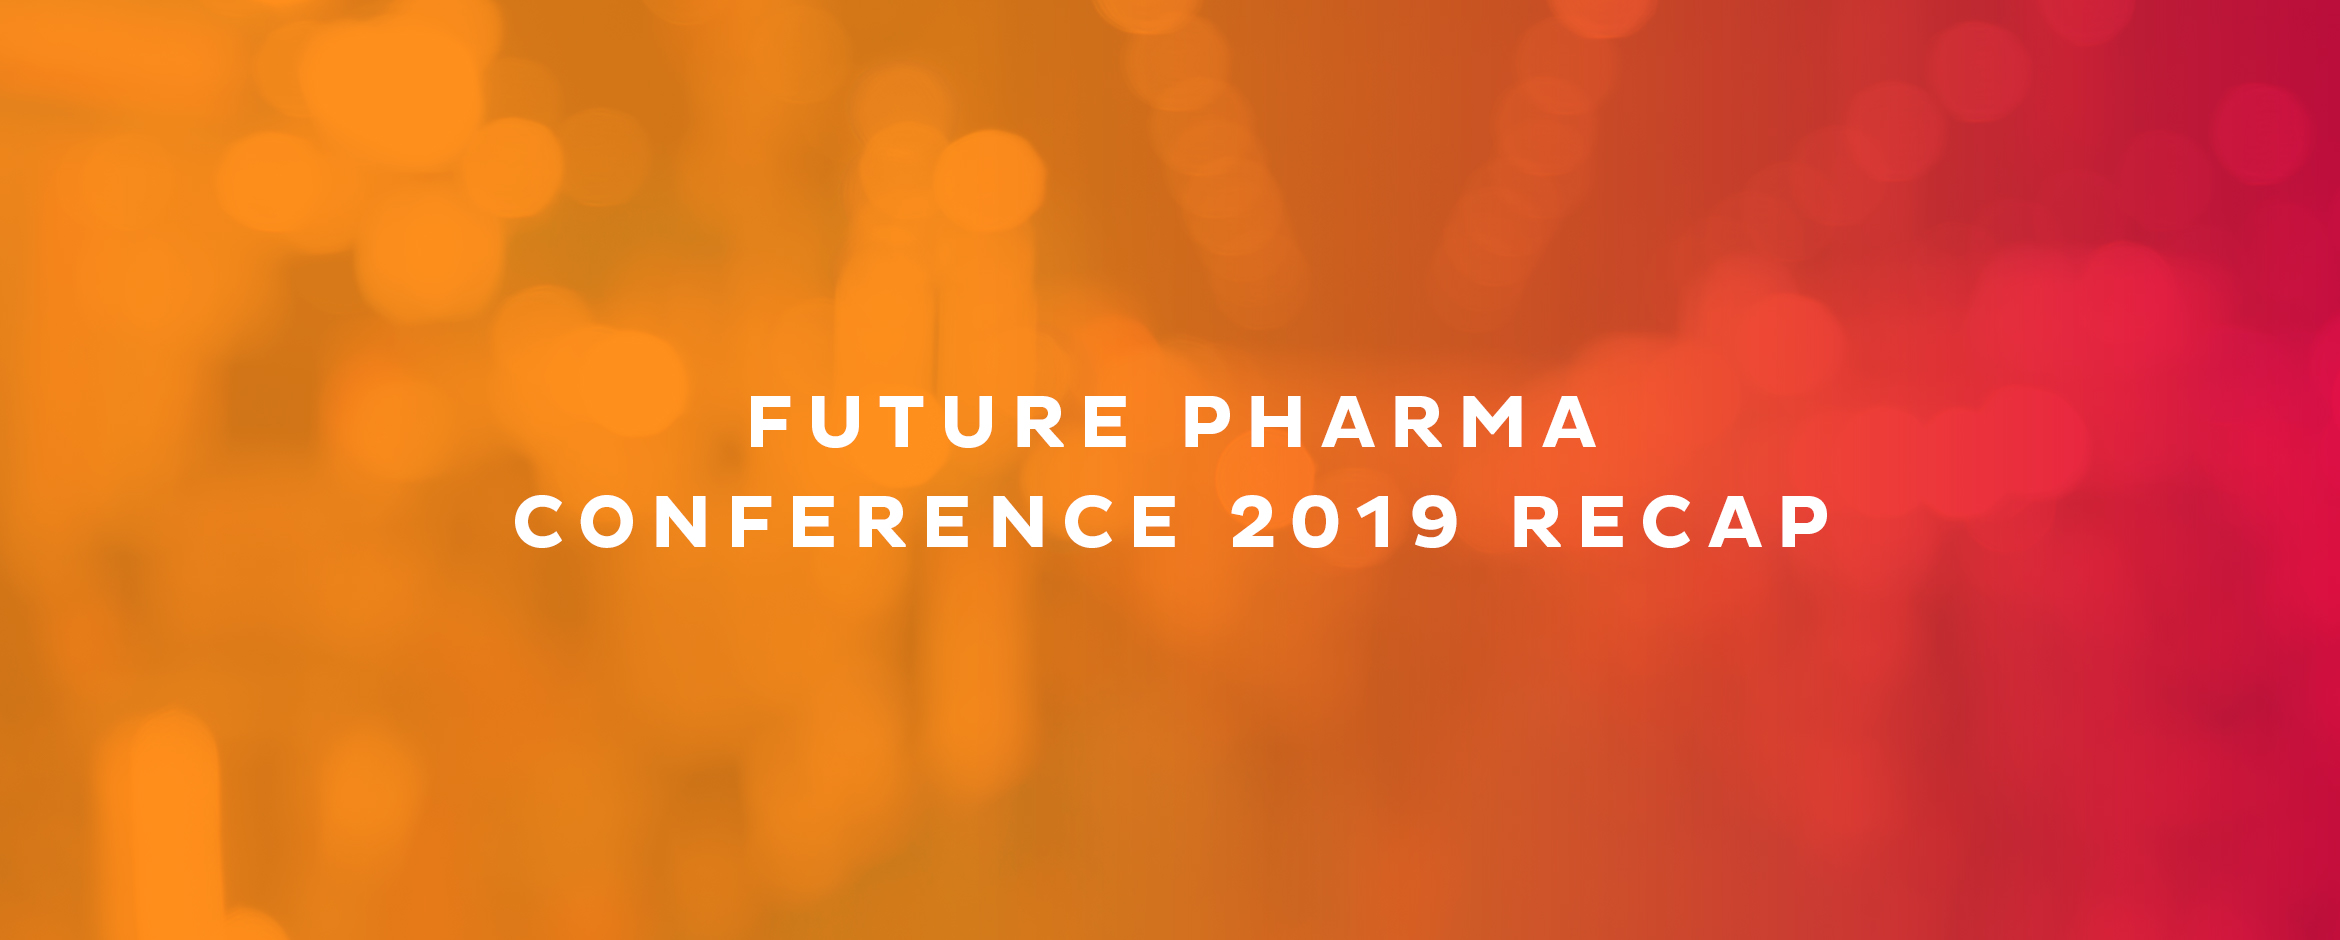 Future Pharma Conference 2019 Recap Hero Image